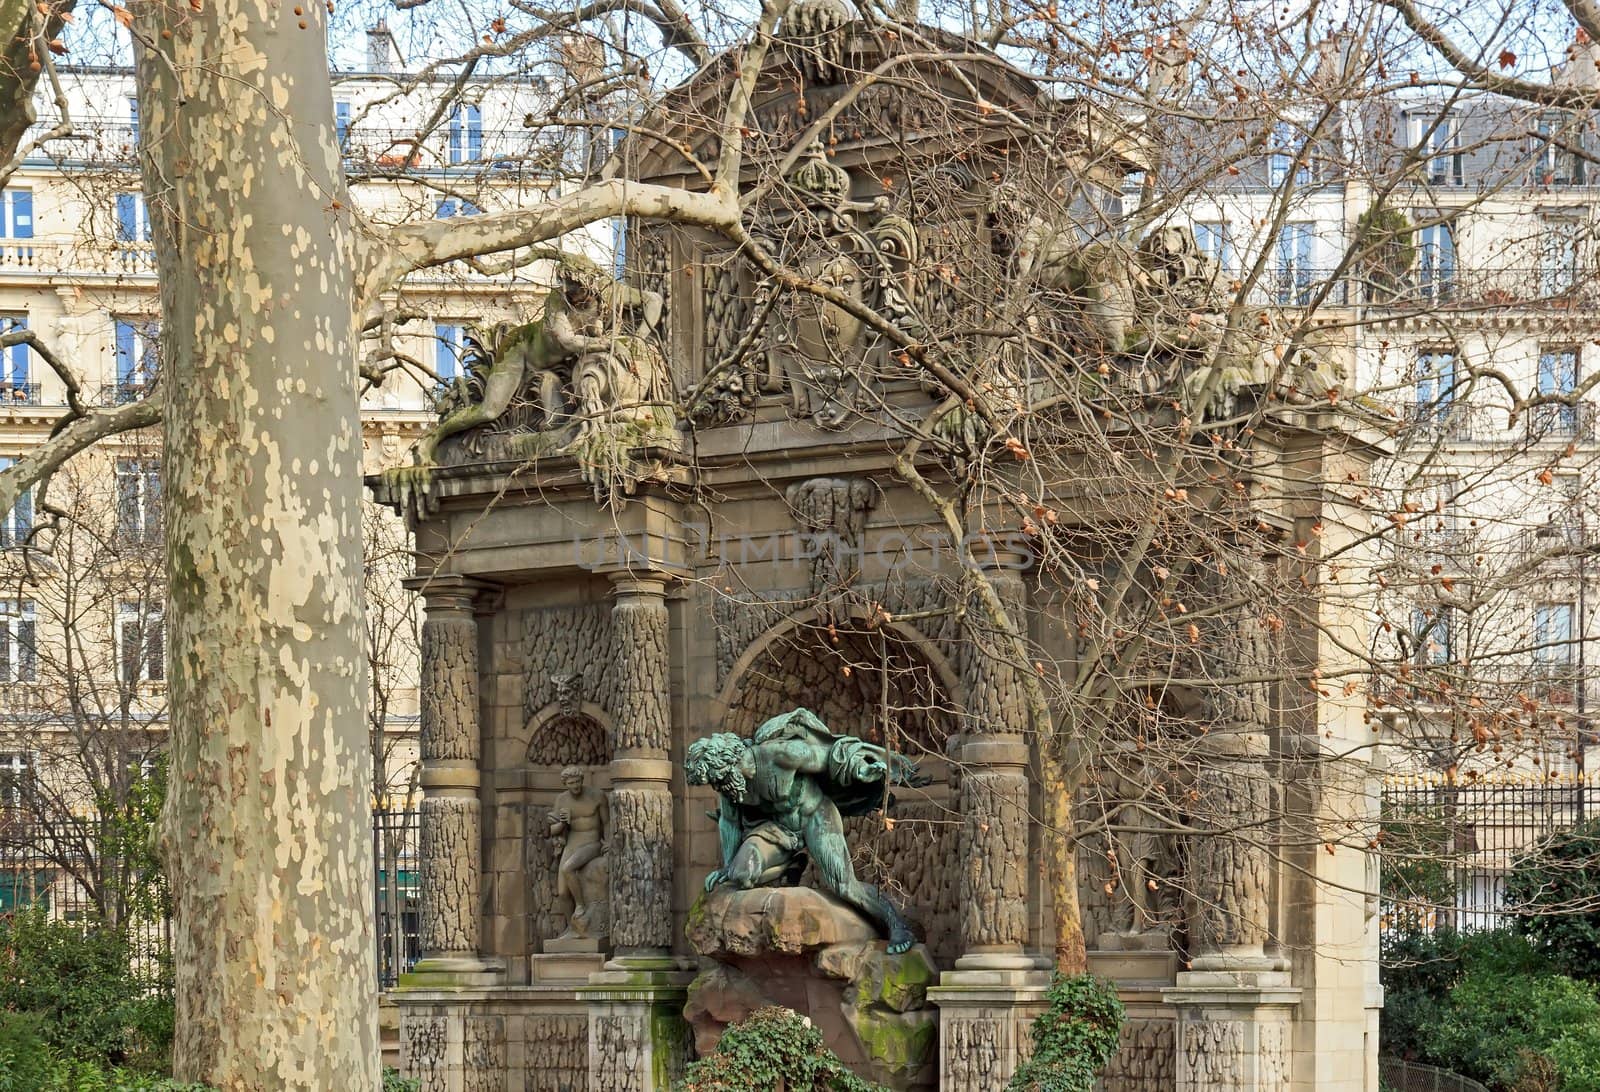 Medici fountain through the trees, statue of Polyphemus by neko92vl